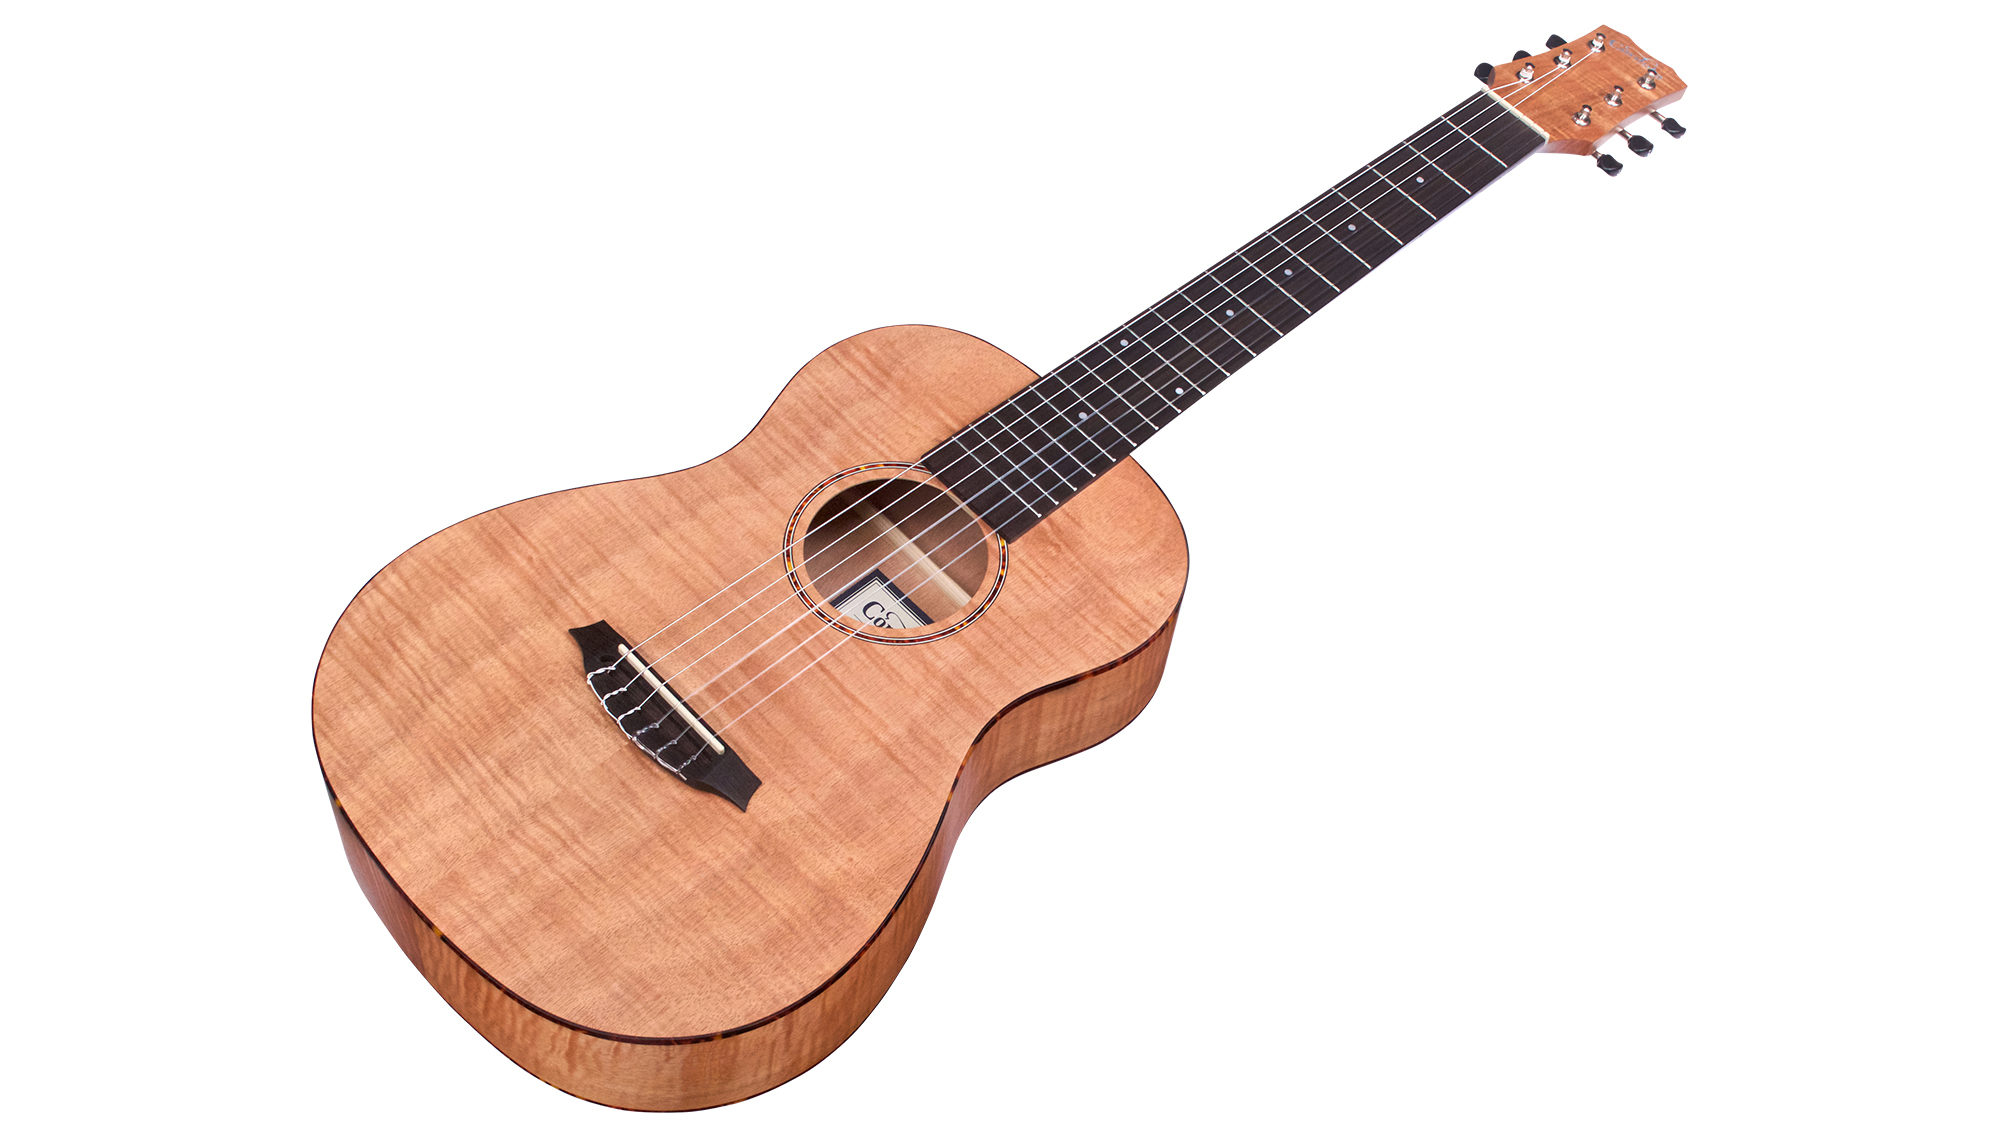 Cordoba Mini Ii Fmh Tout Acajou Rw - Natural - Classical guitar 3/4 size - Variation 2